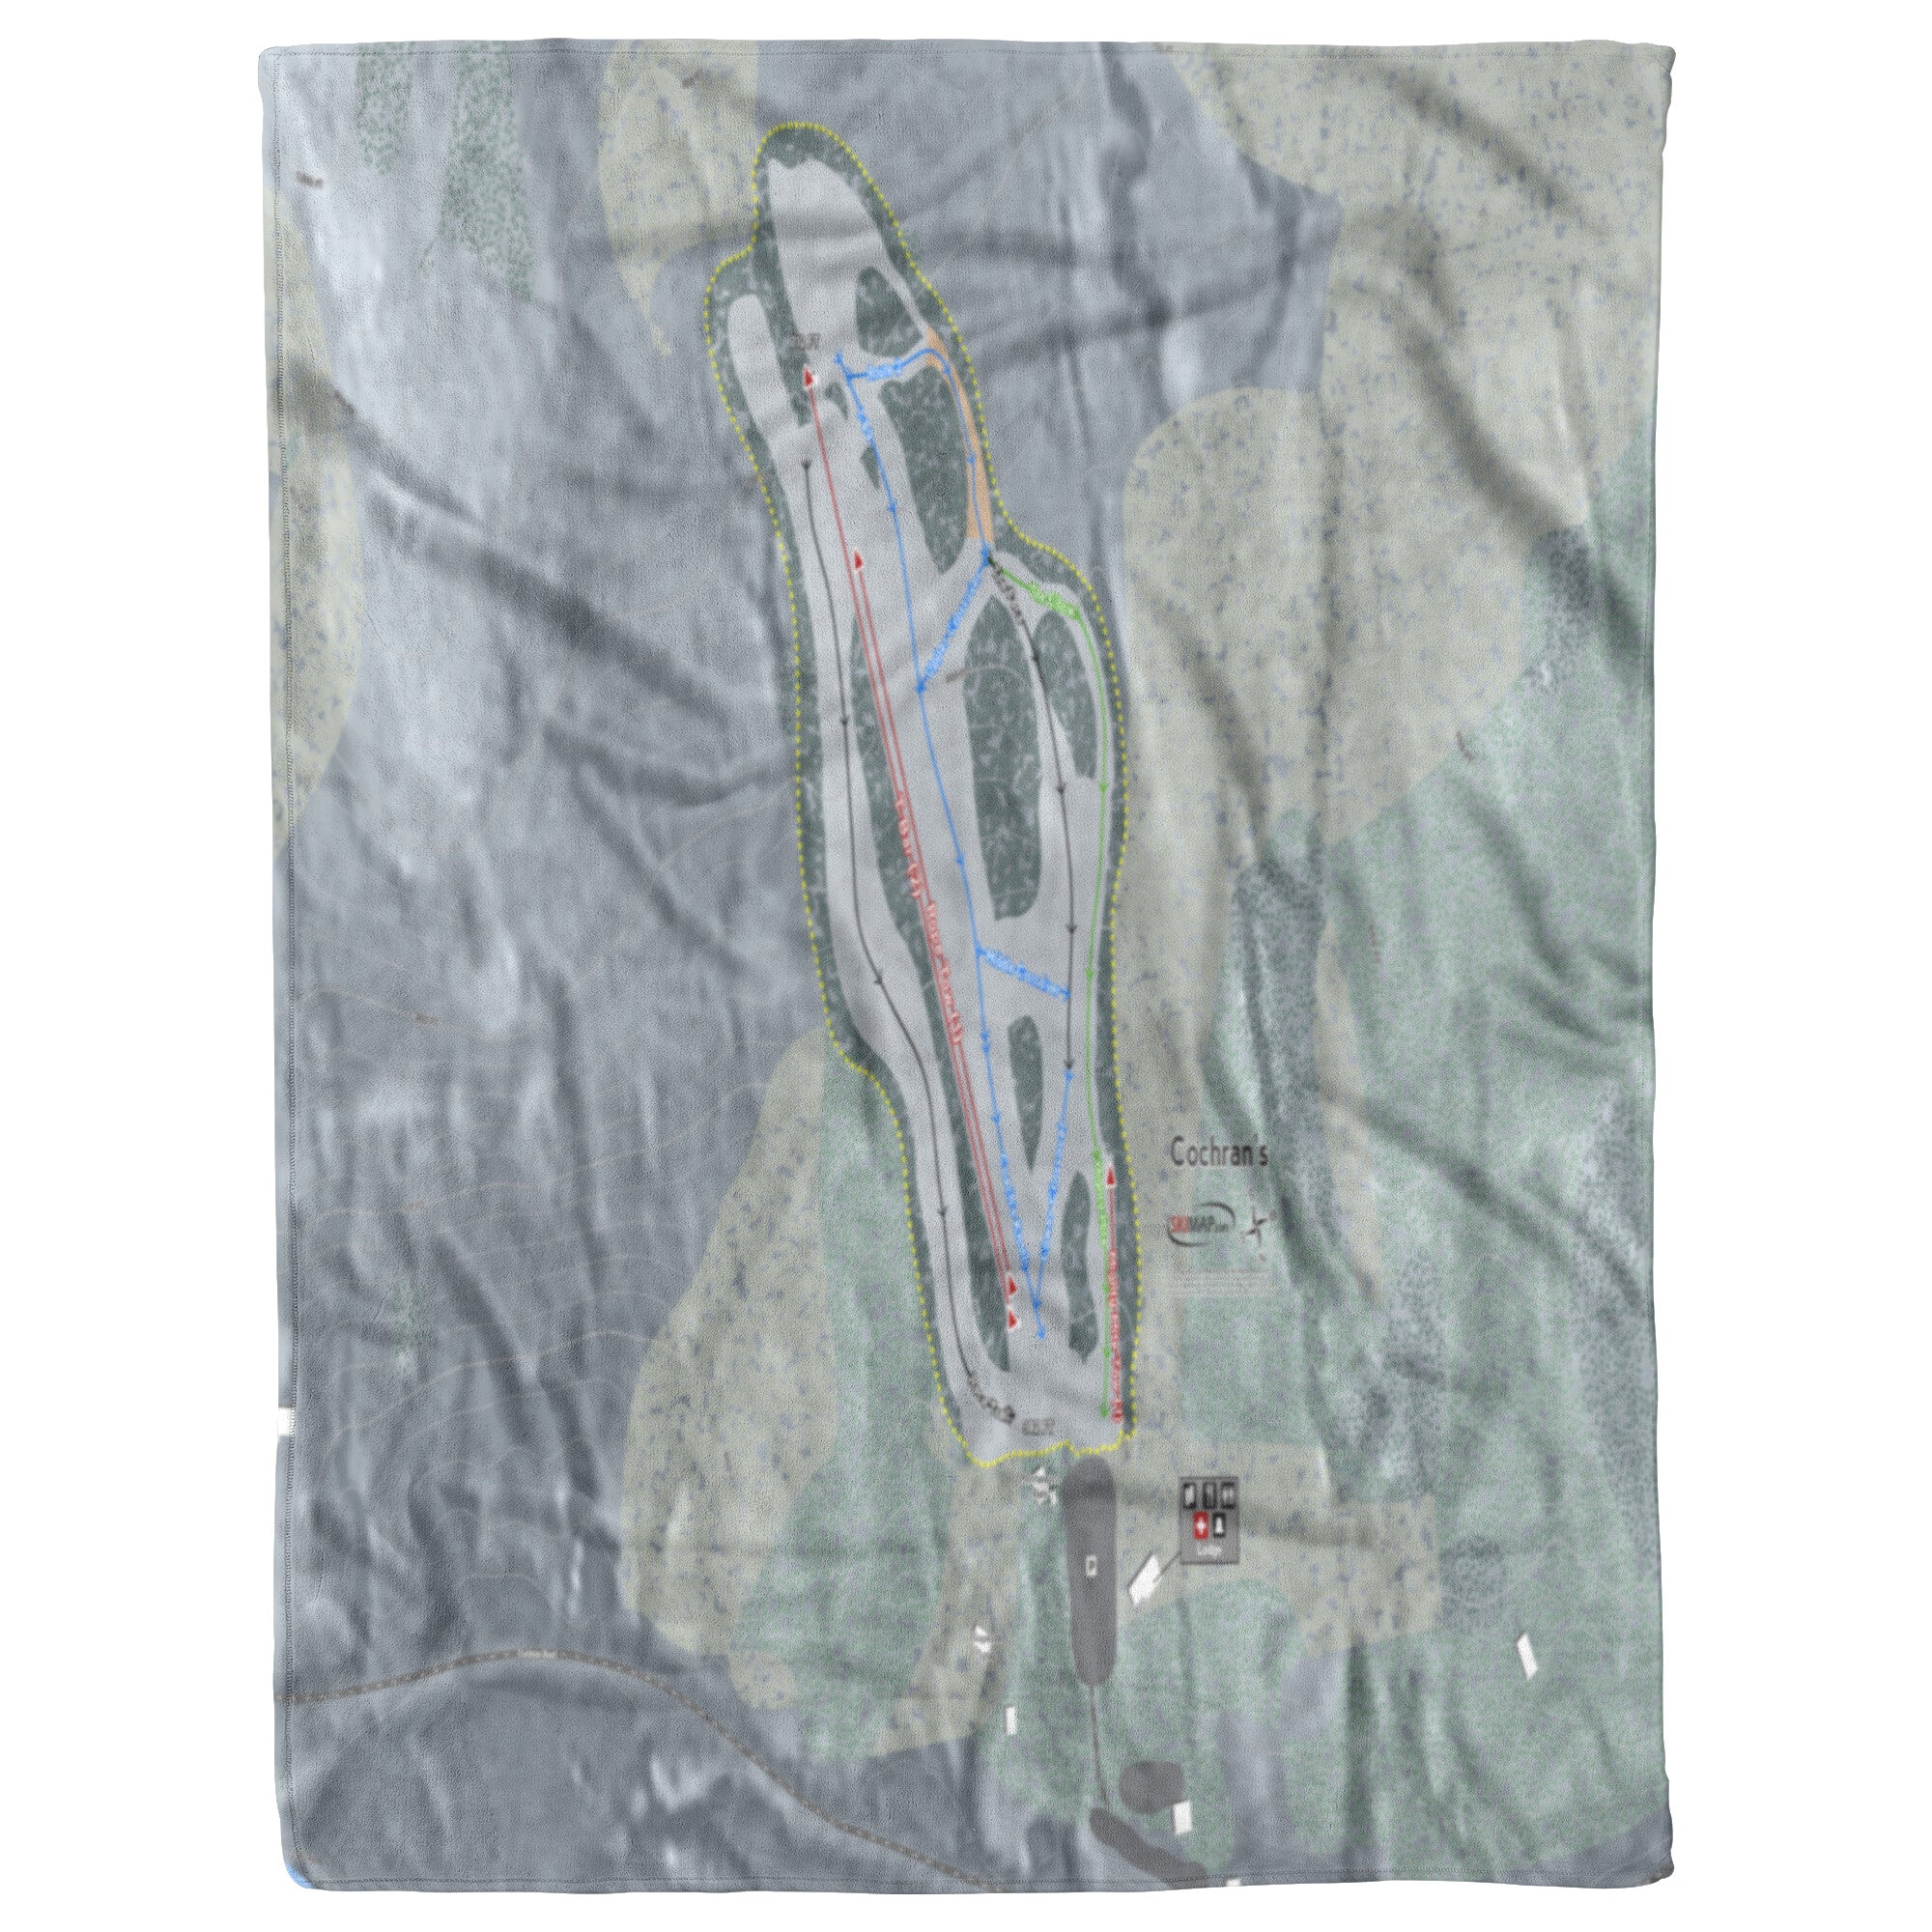 Cochrans, Vermont Ski Trail Map Blanket